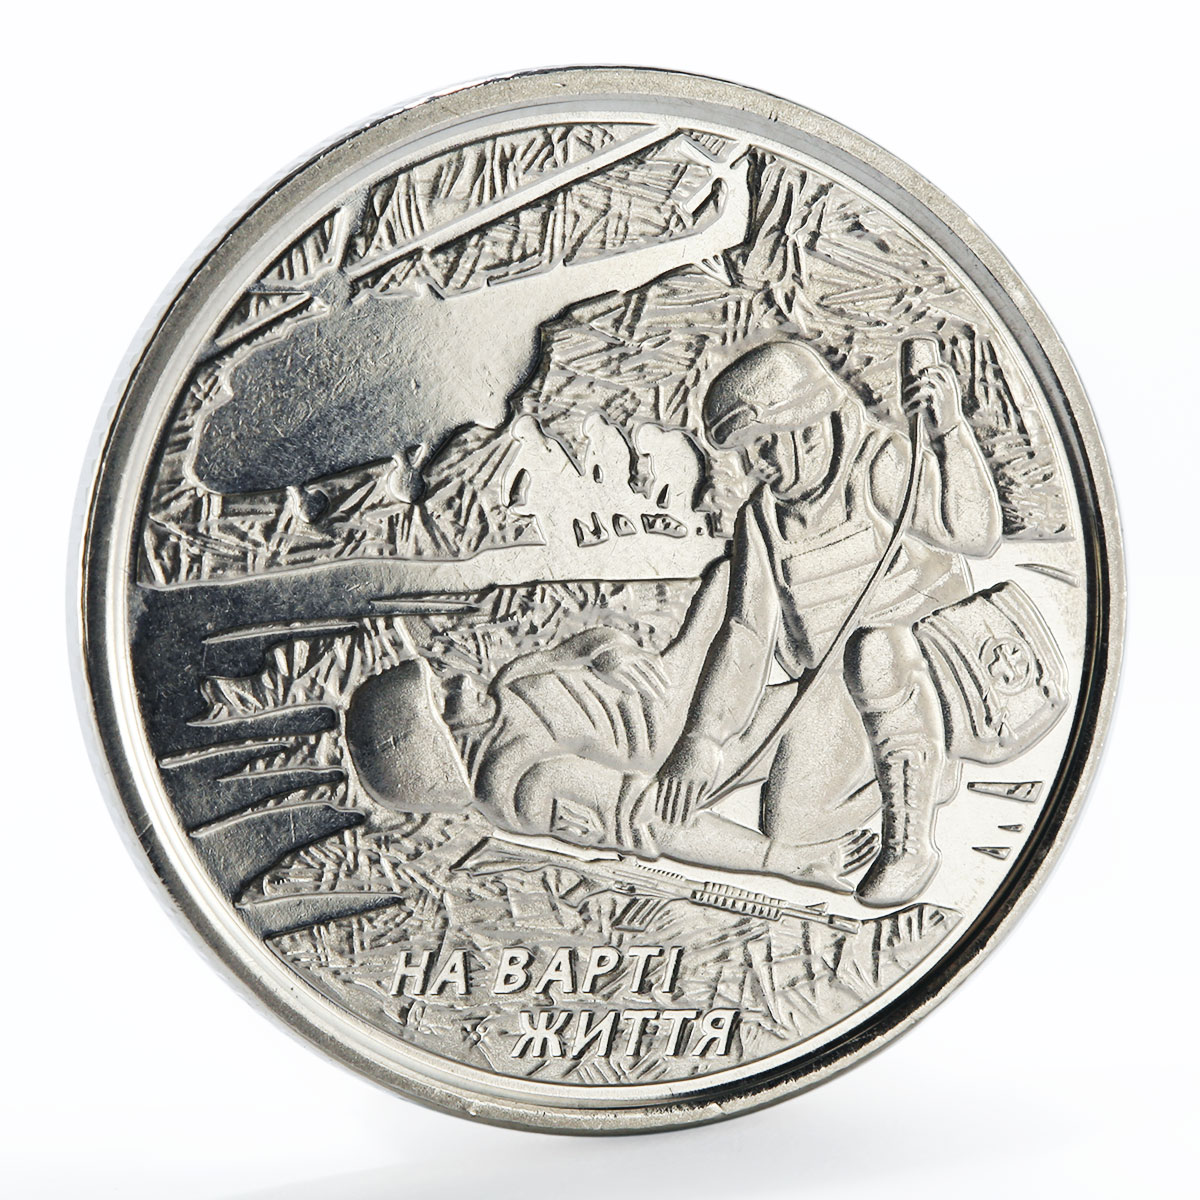 Ukraine 10 hryven Worth a Life 25 coins per roll 2019